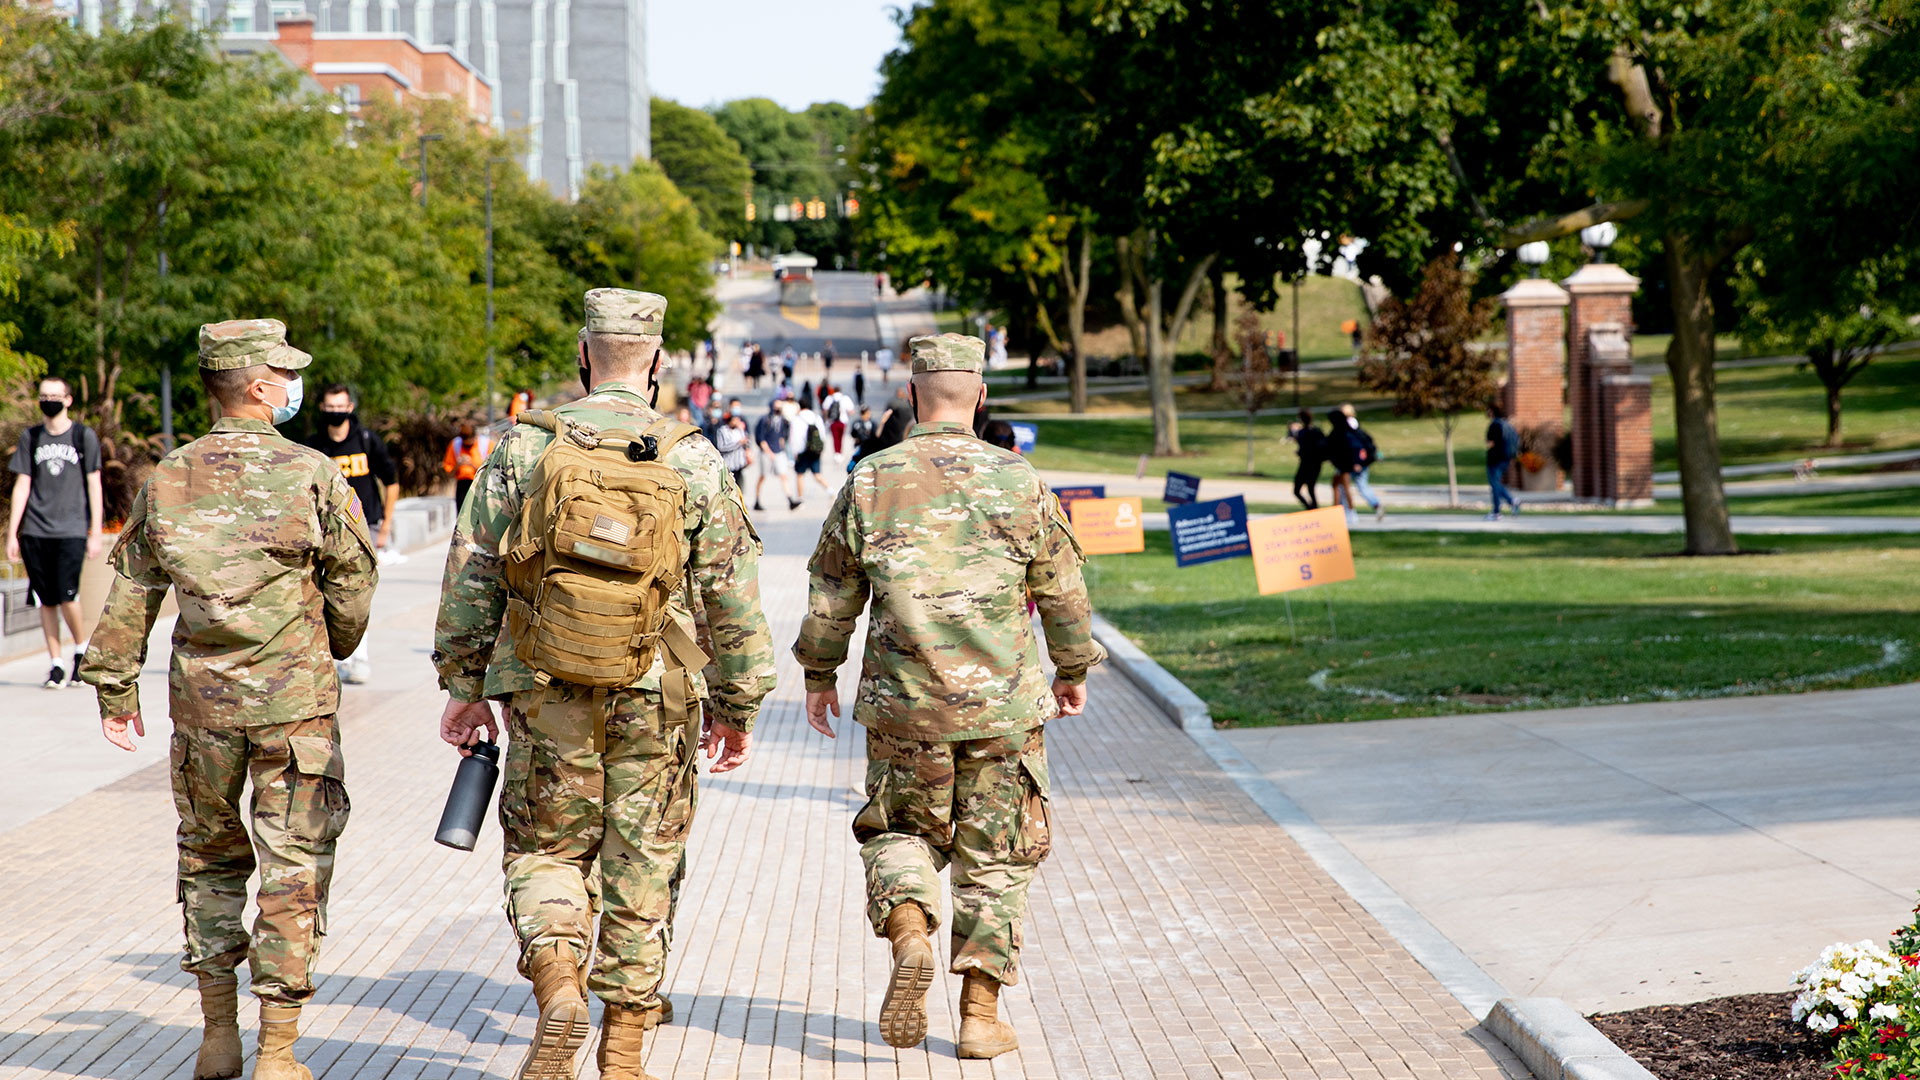 Cadets walking down the sidewalk